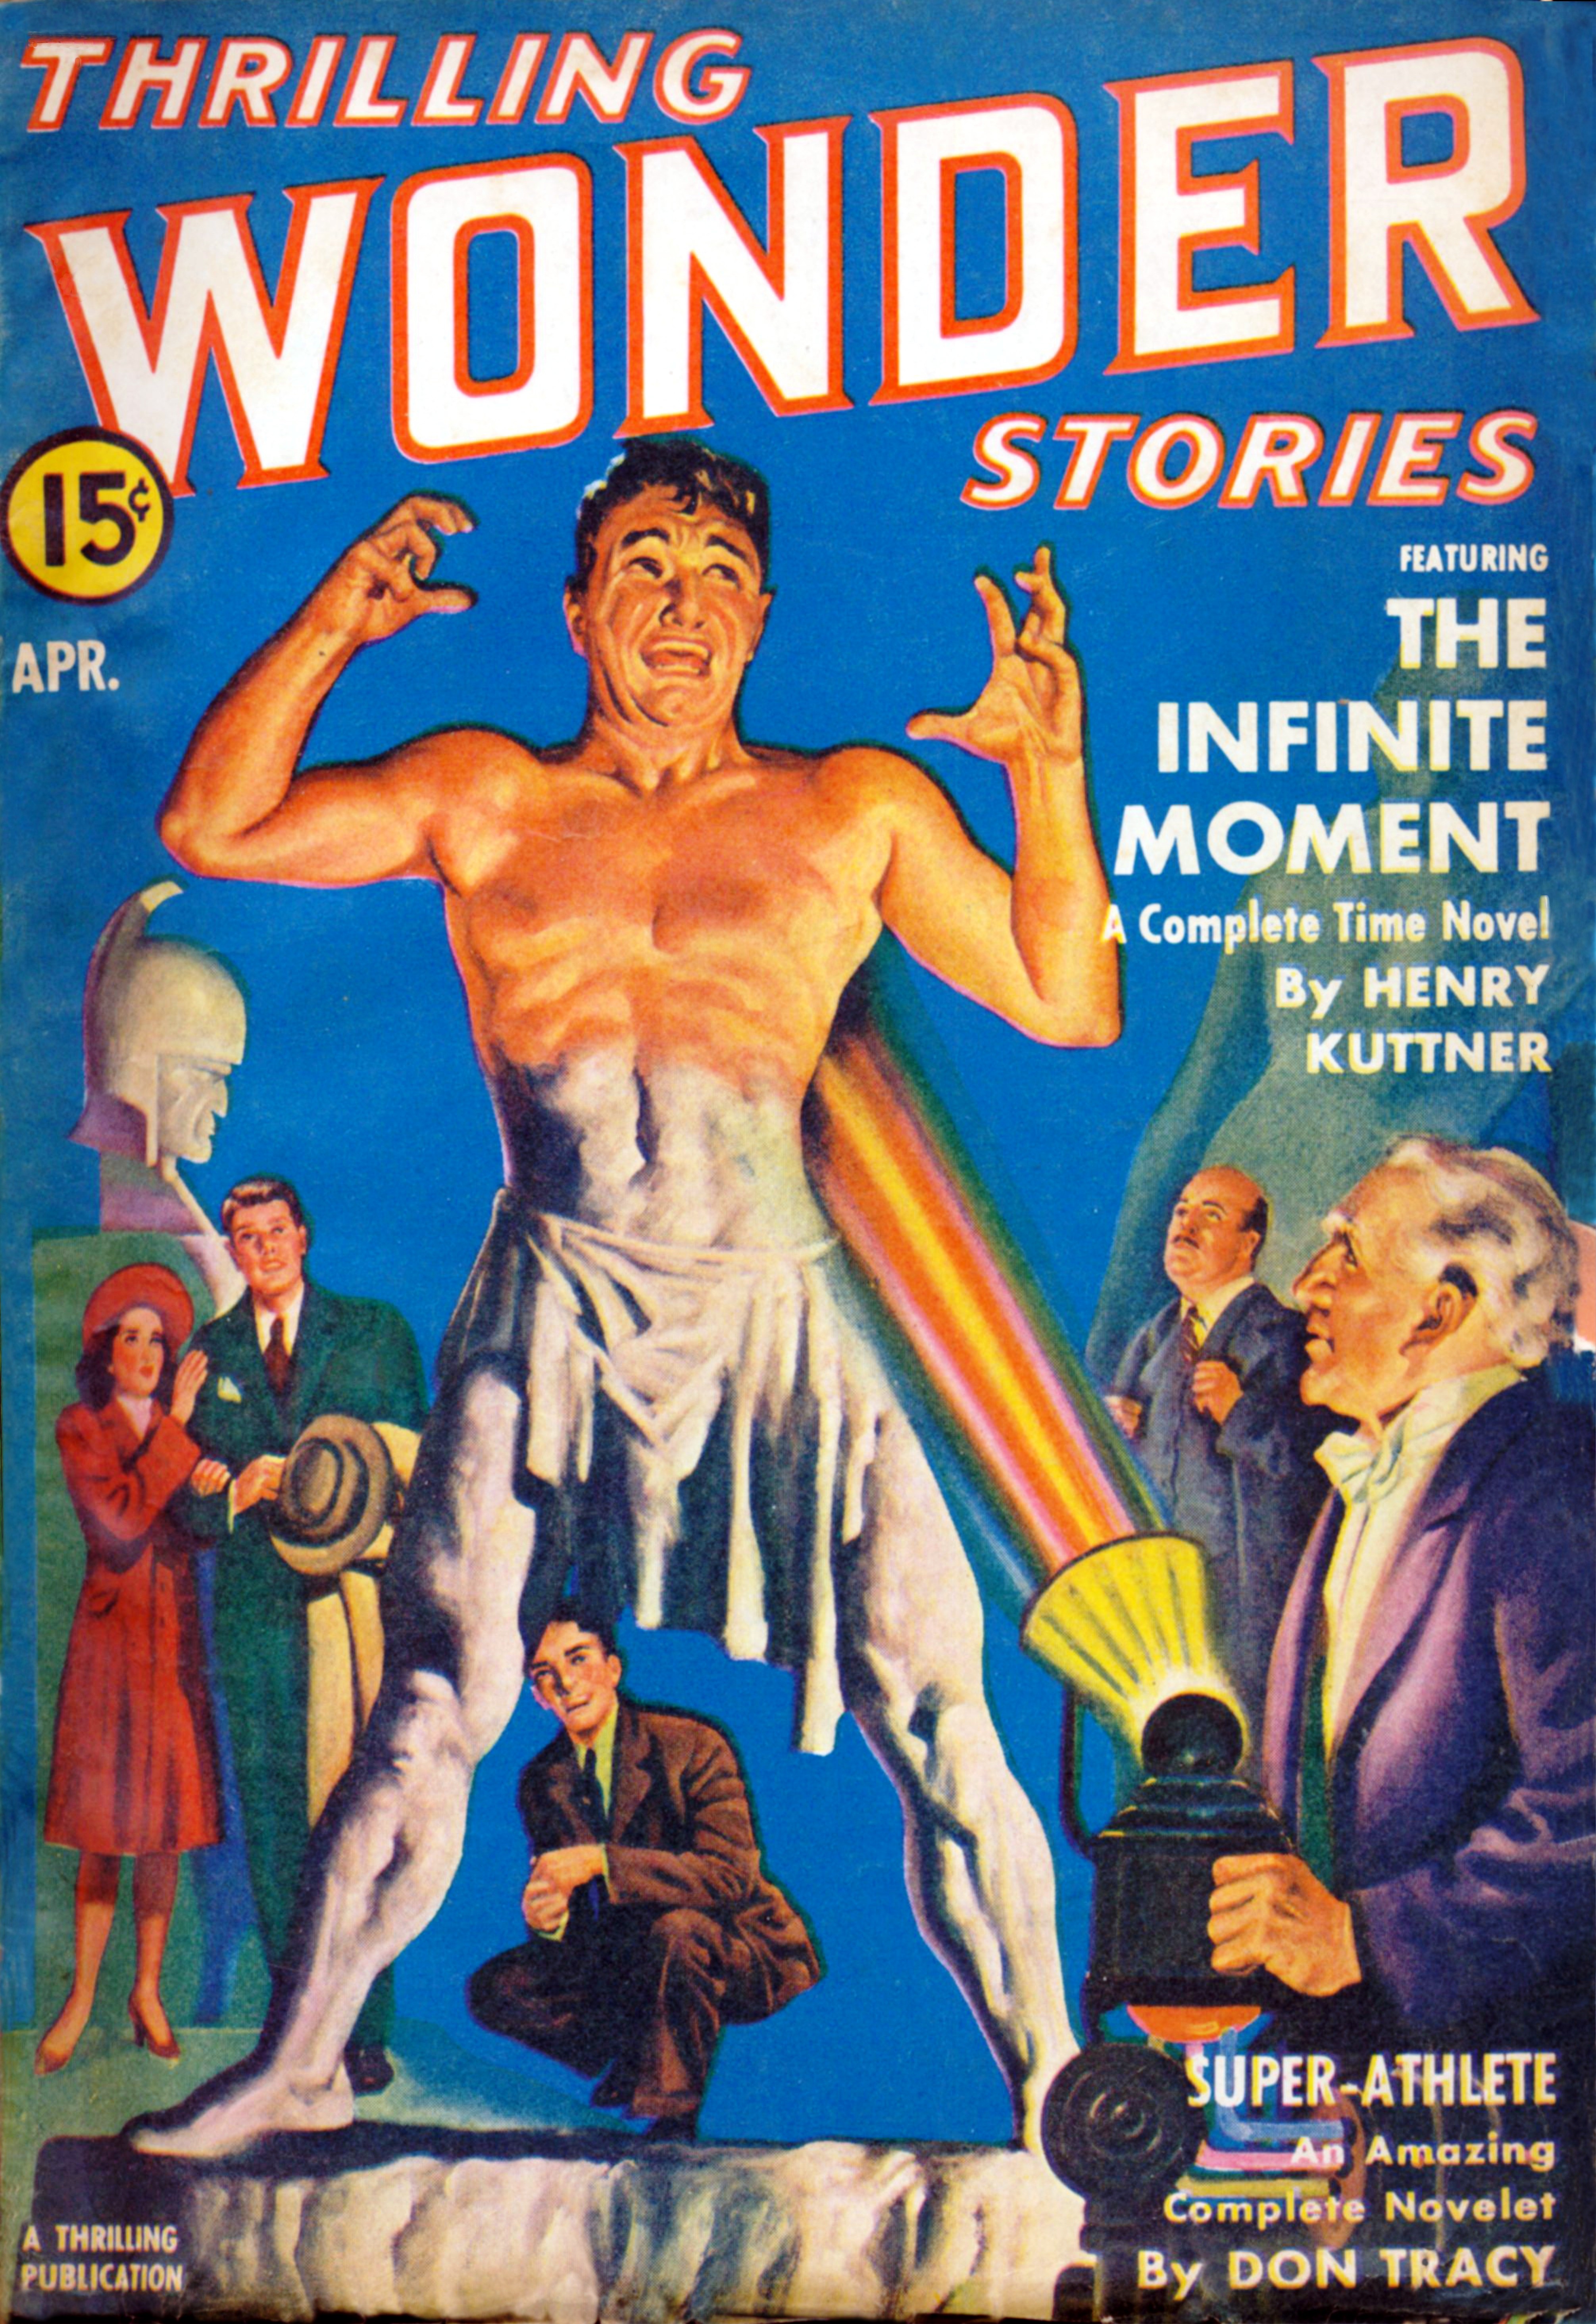 Thrilling Wonder Stories, April 1942